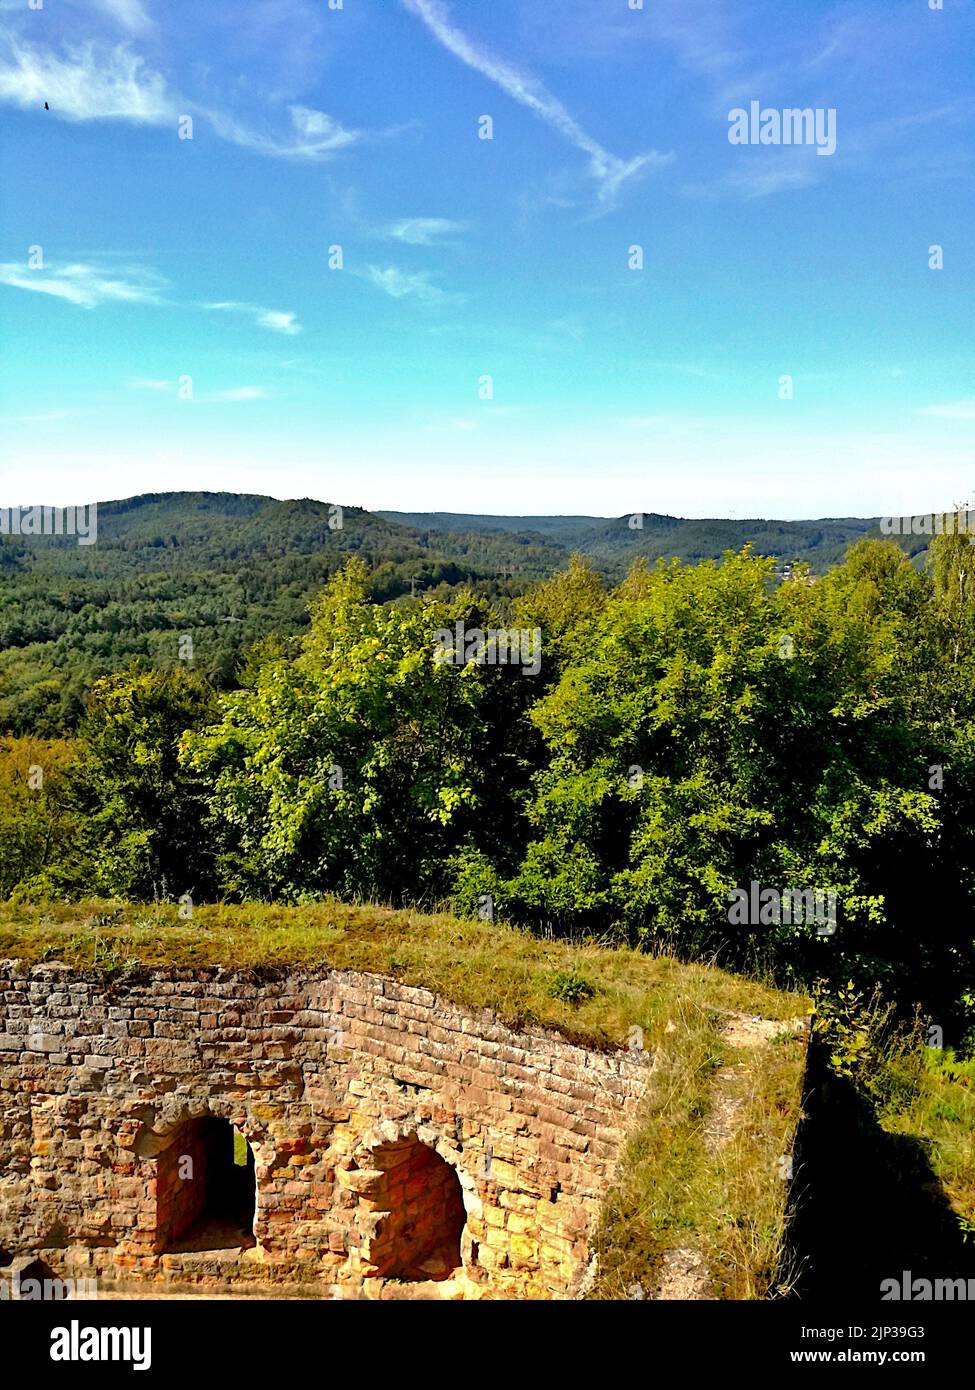 A vertical shot of Grafenstein castle in green mountains in Merzalben, Germany Stock Photo